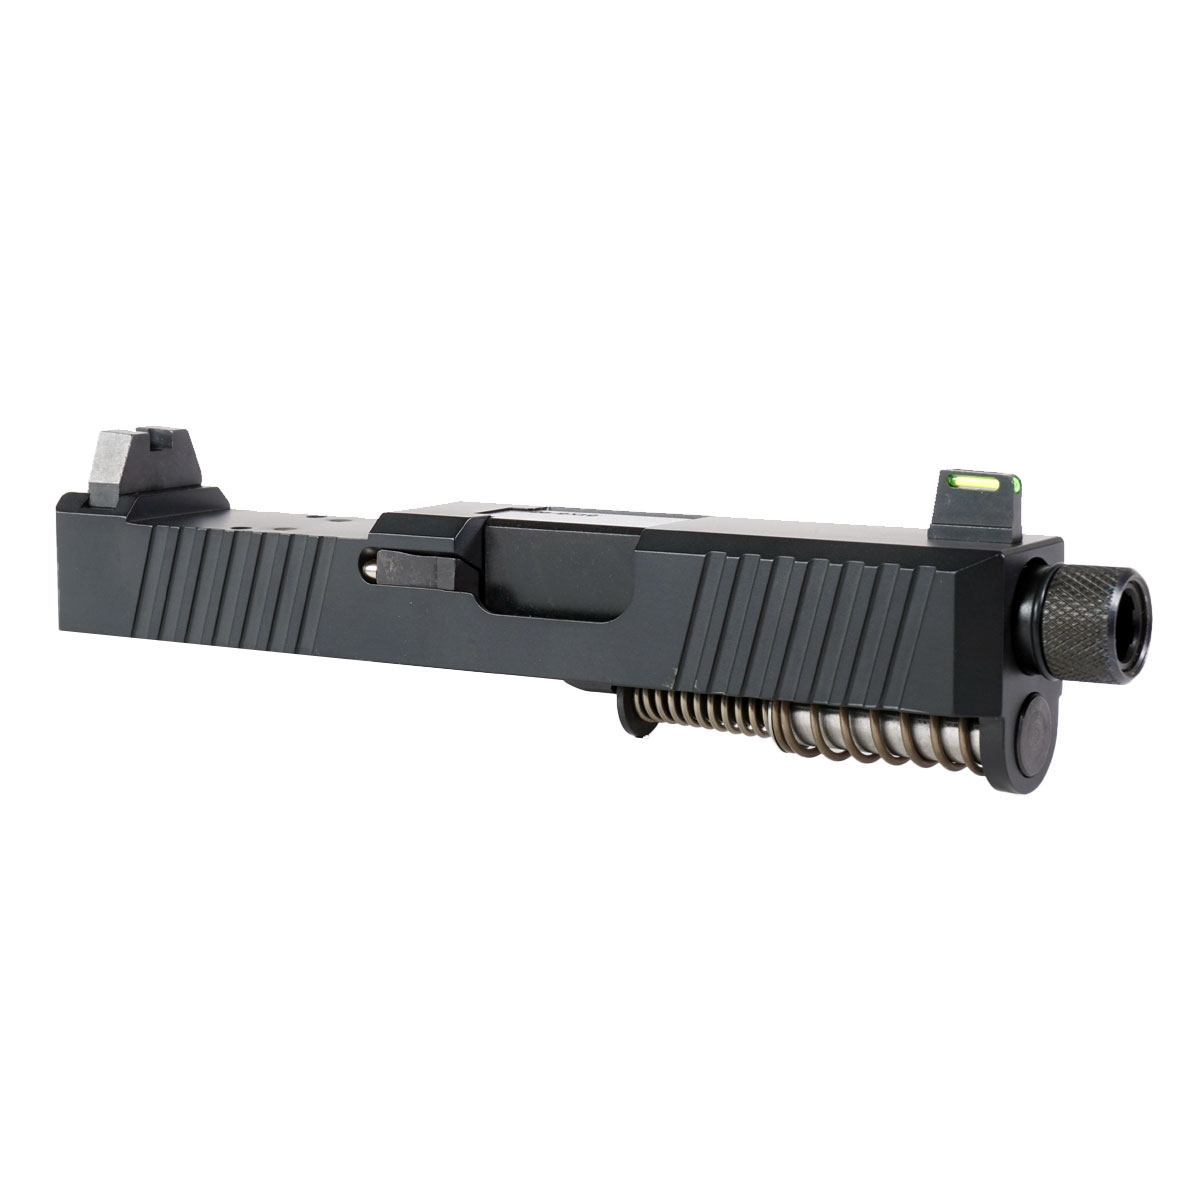 OTD 'Creature Fear' 9mm Complete Slide Kit - Glock 26 Gen 1-3 Compatible